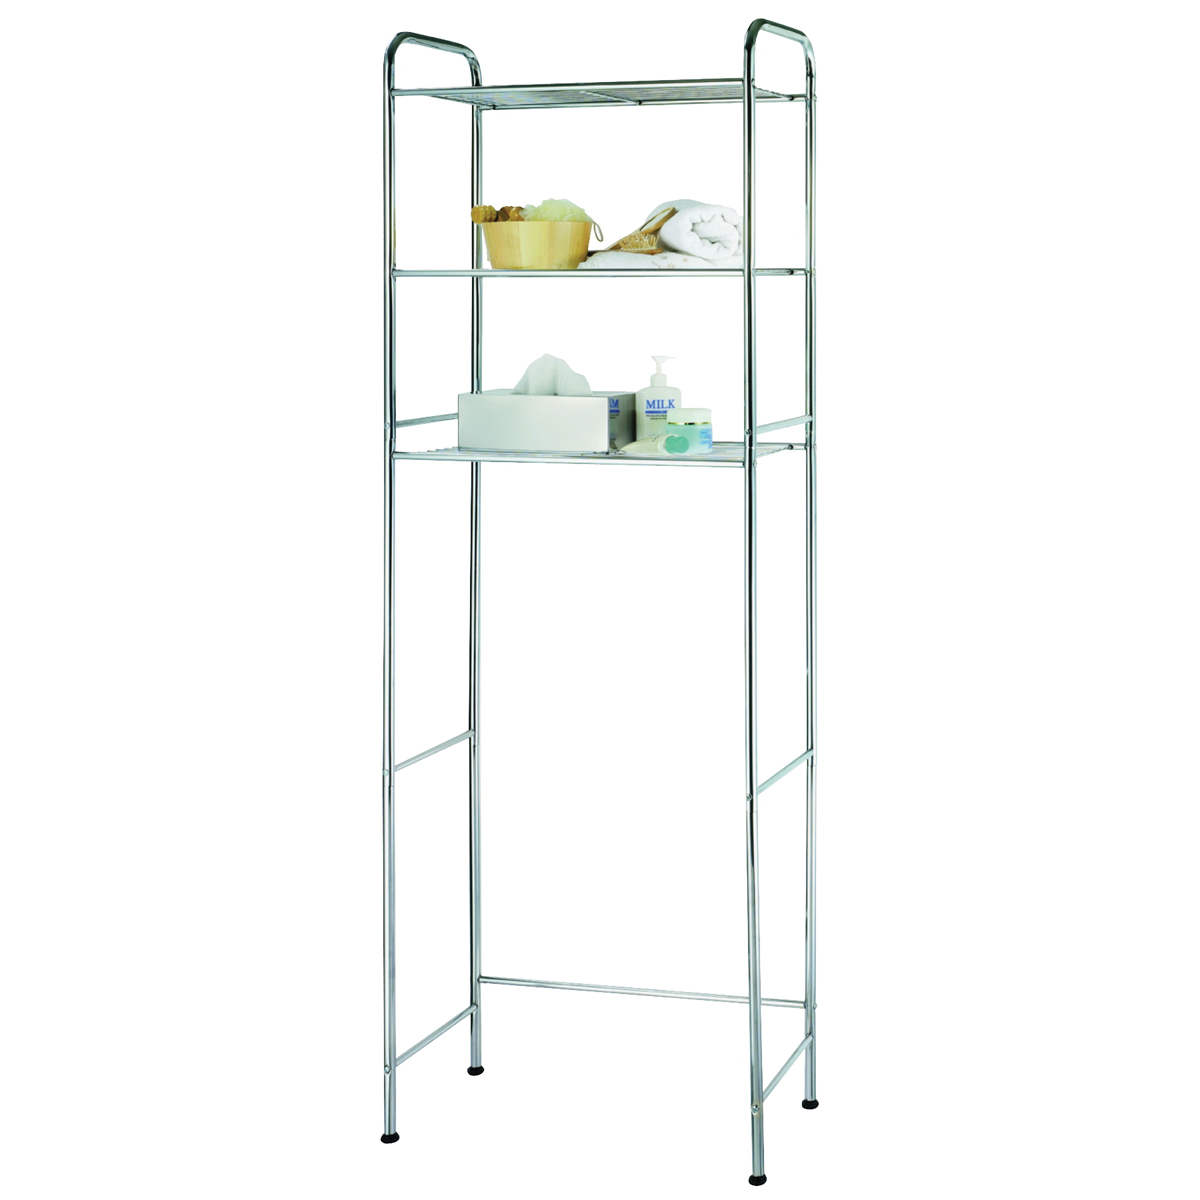 Simple Spaces TS16C0-CH Bathroom Shelf, 15 lb Each Shelf Max Weight Capacity, 3-Shelf, Steel, Polished Chrome - 1